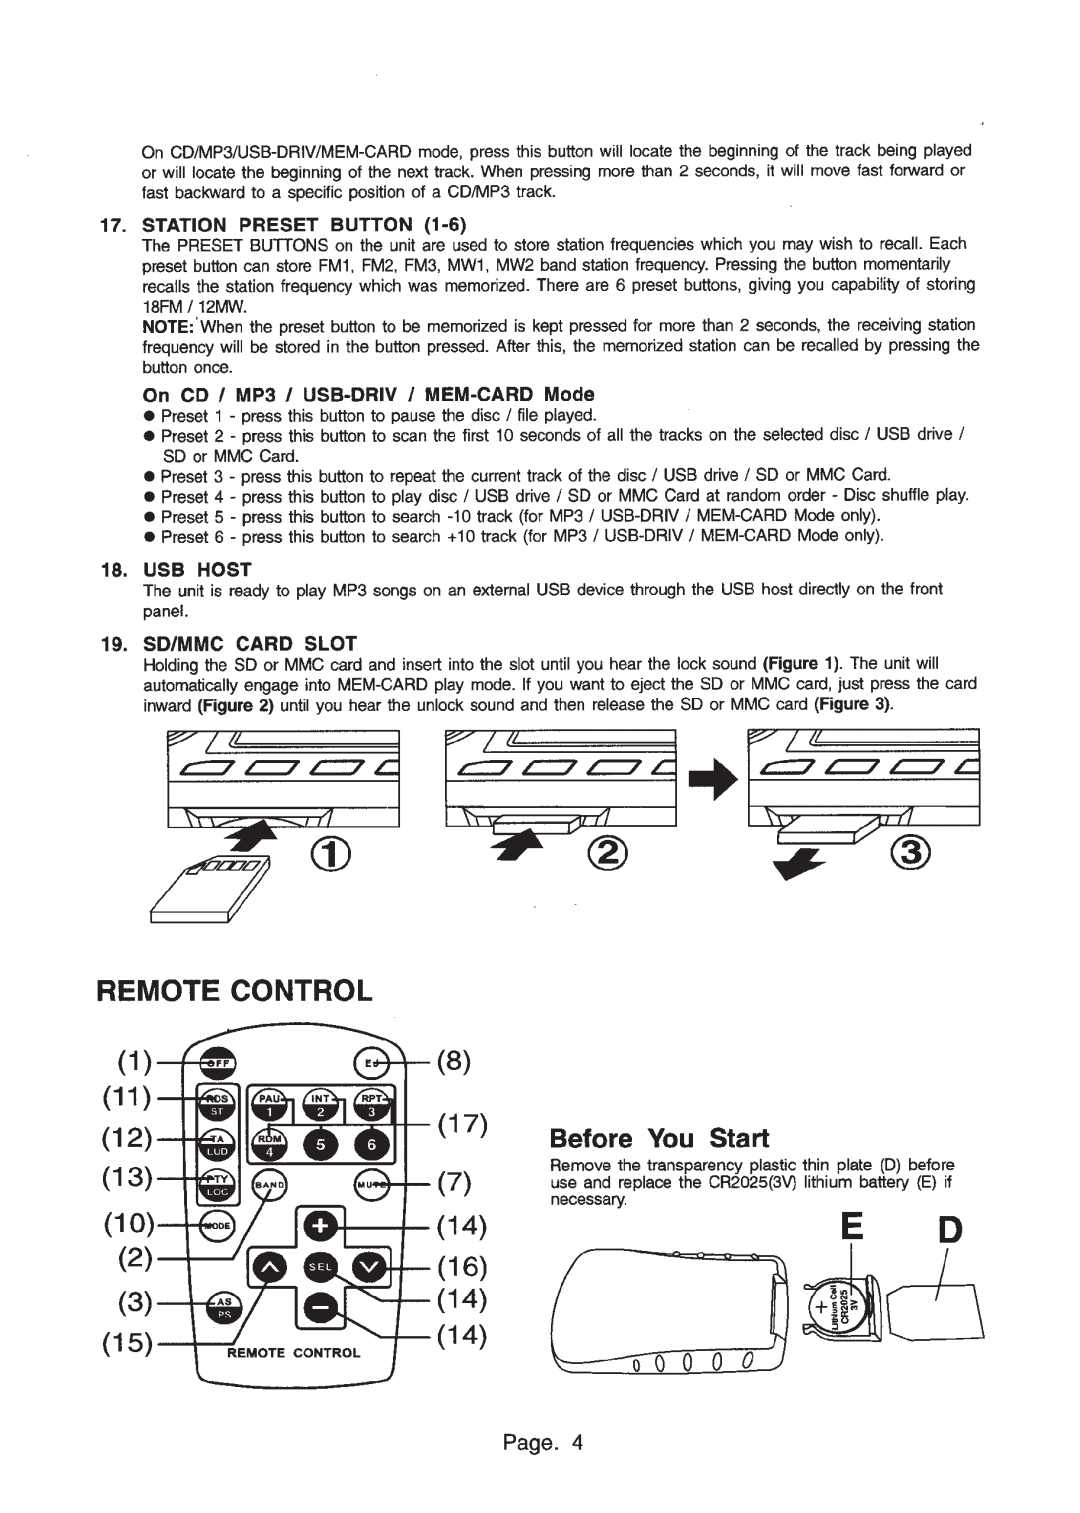 Lanzar Car Audio VBD2800MU manual 